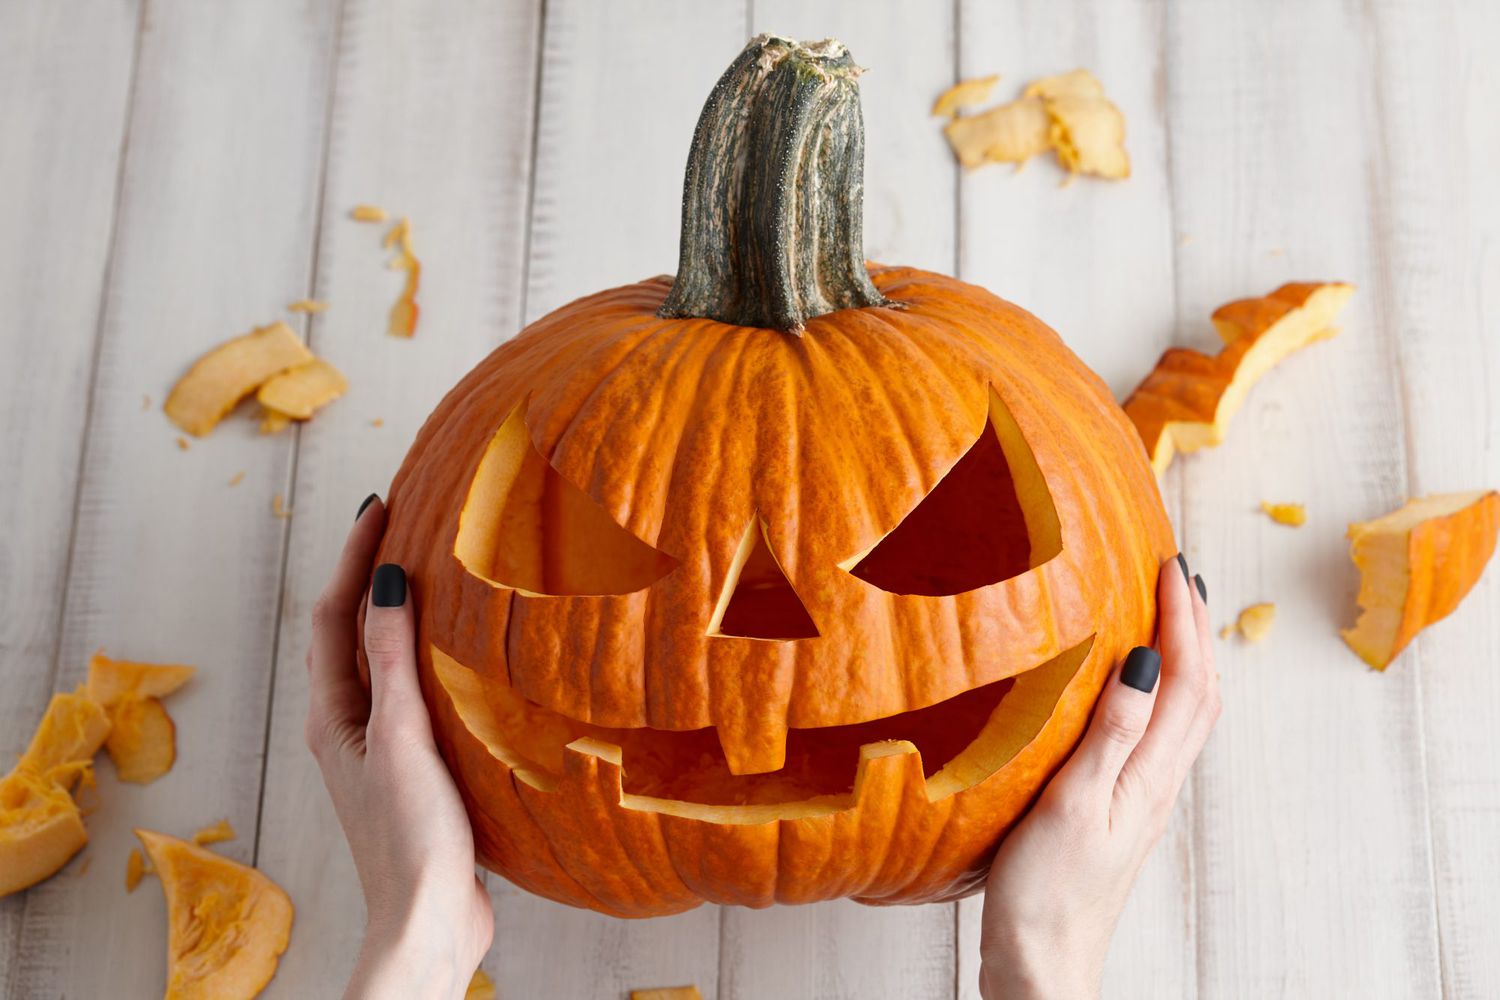 How to carve a pumpkin - guide (jack-o'-lantern)